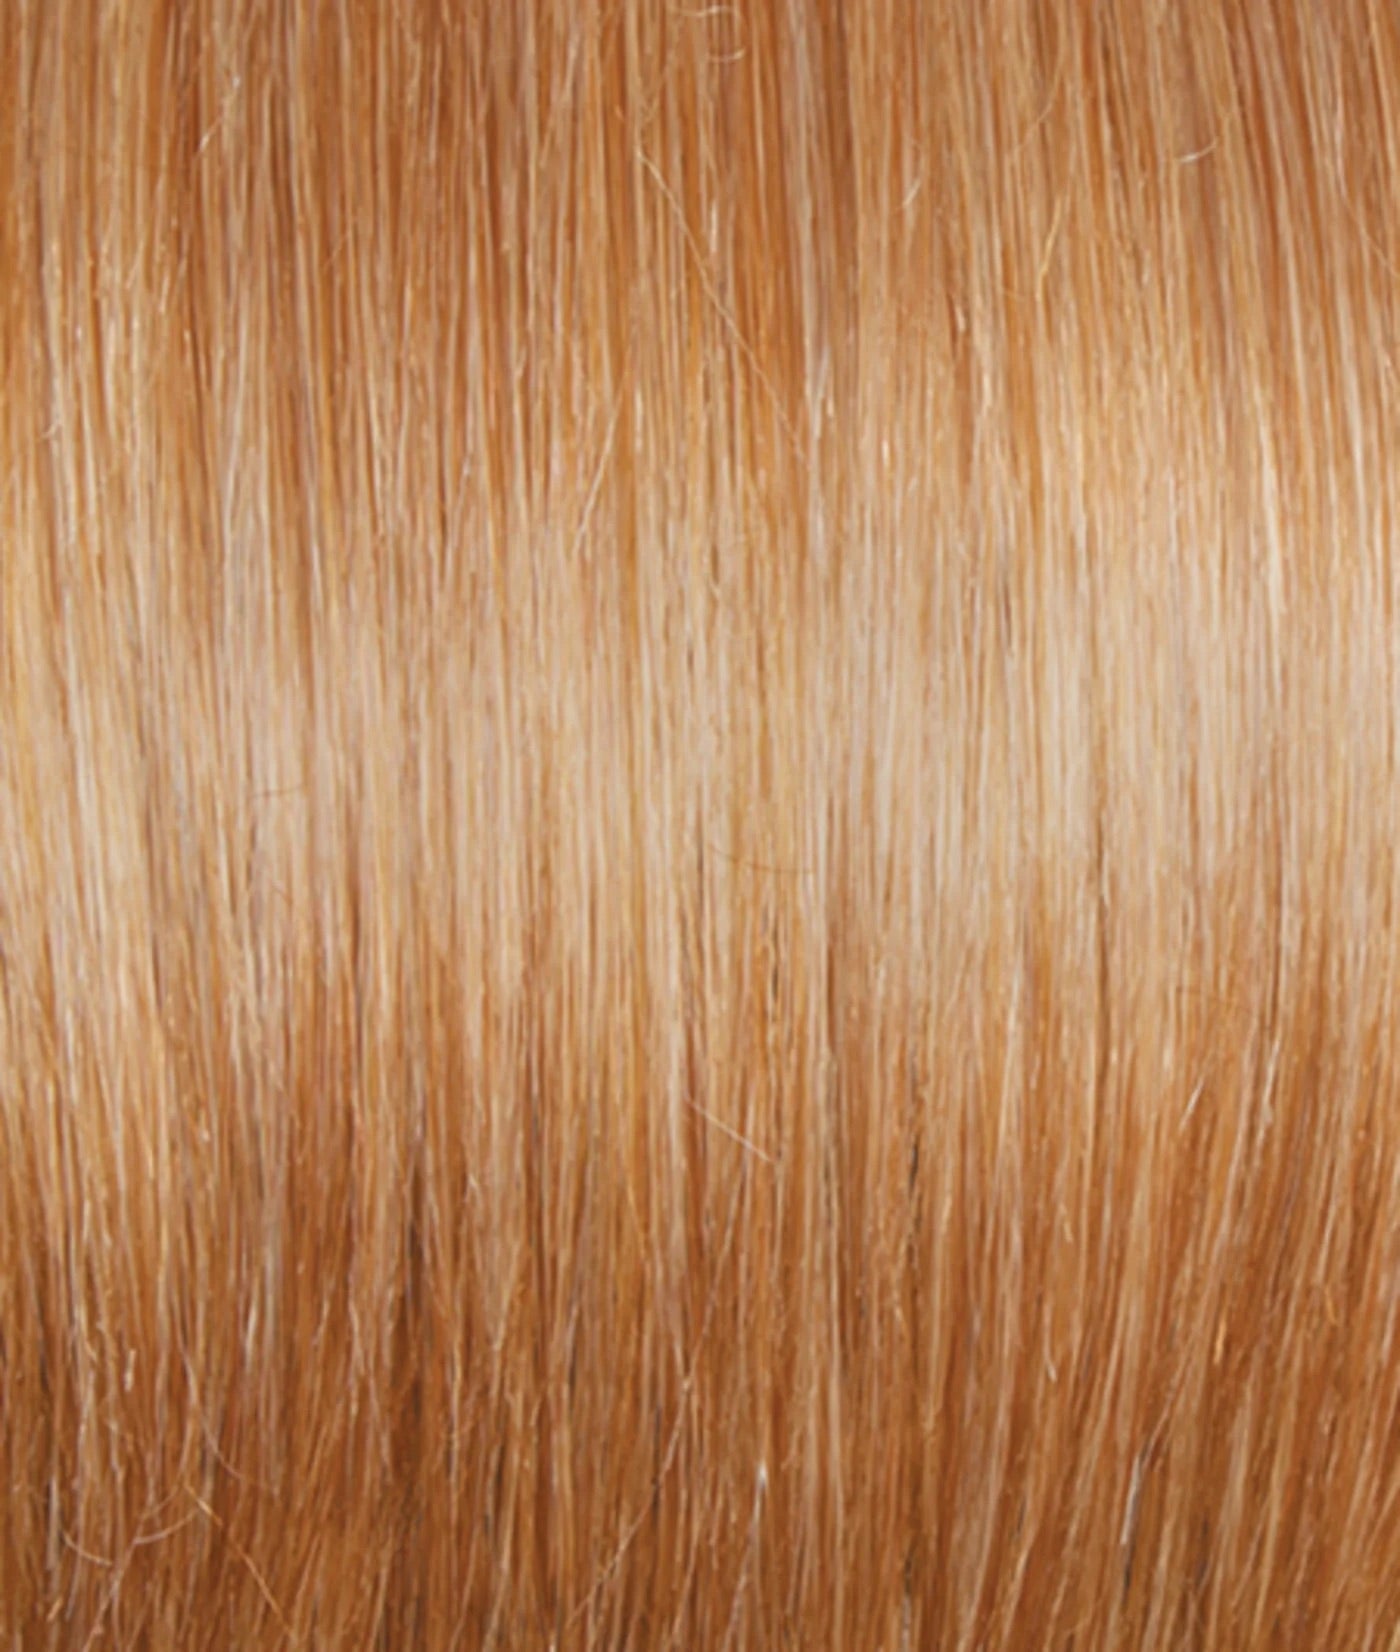 Hairdo by Hair U Wear - 10pc Straight Human Hair Extension Kit R10HH Palest Blonde